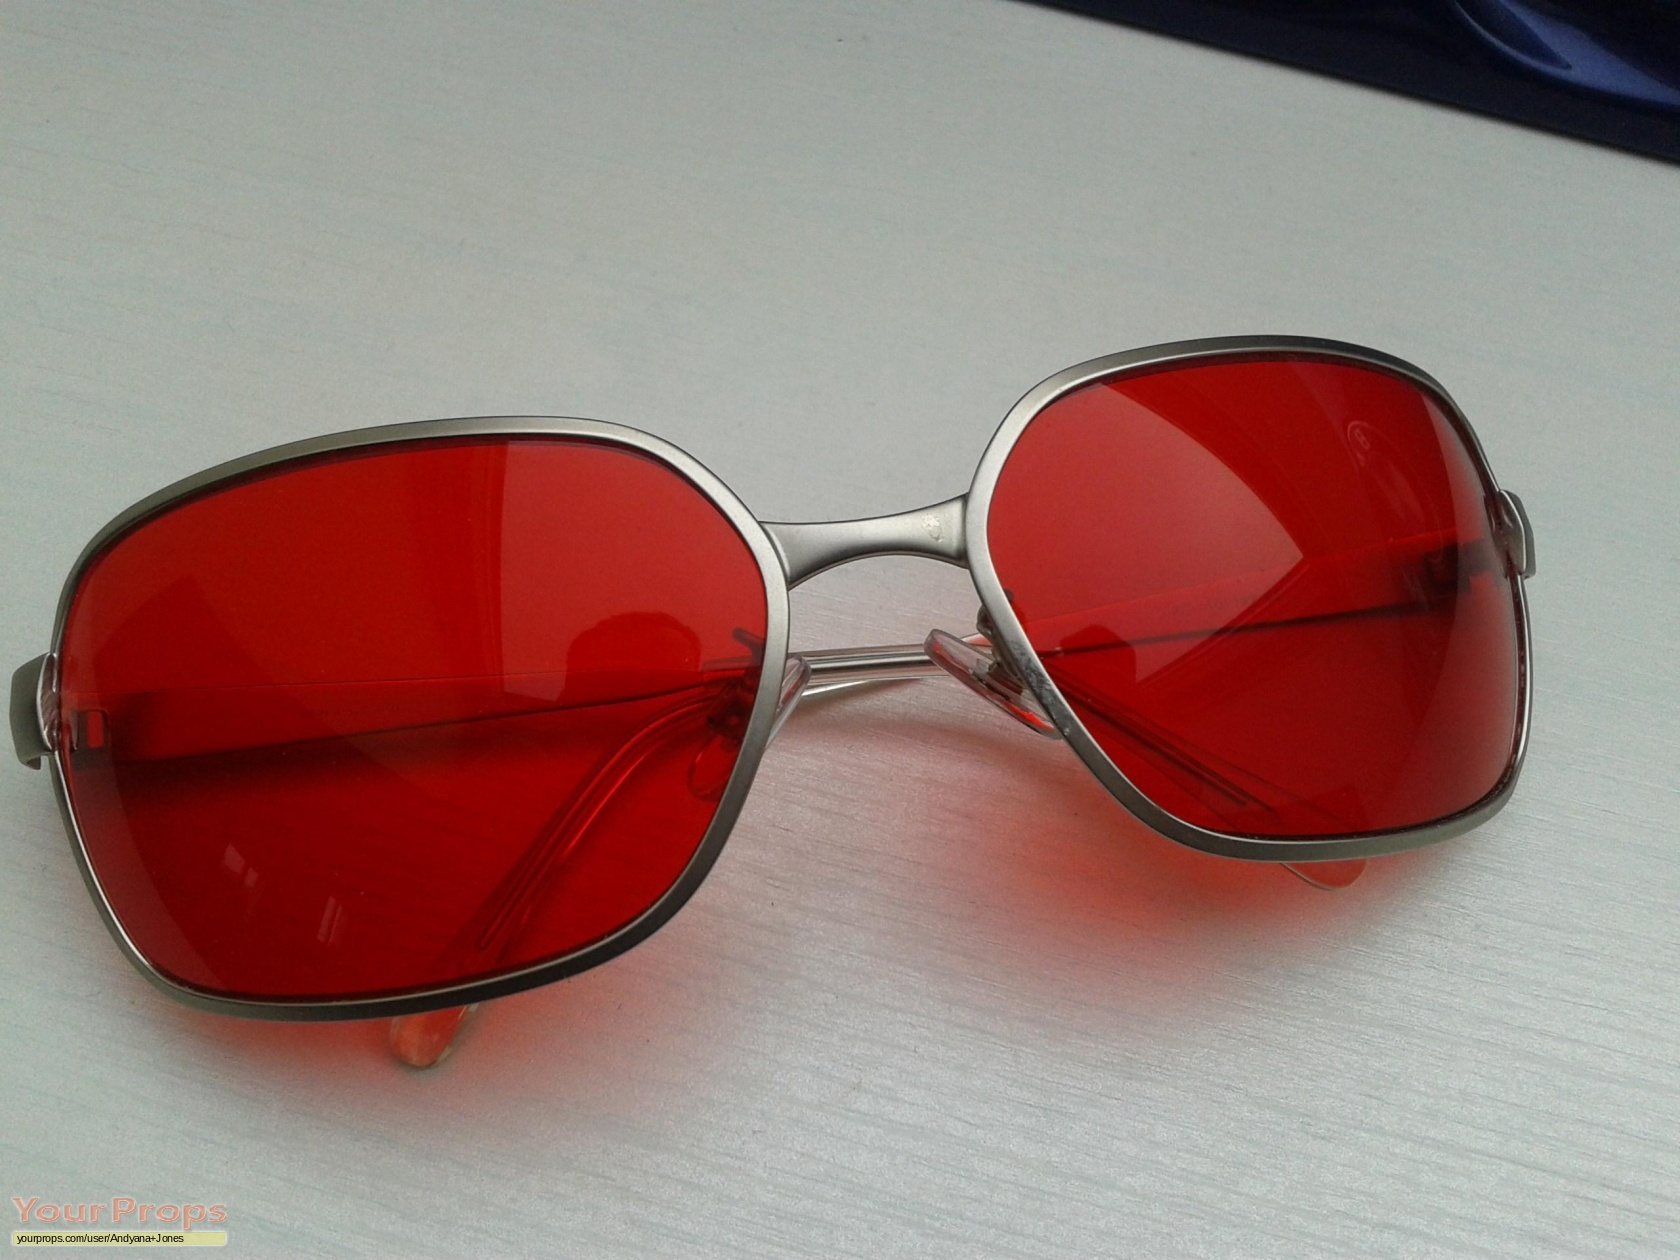 Fight Club Tyler Durden Blood Sunglasses replica movie costume